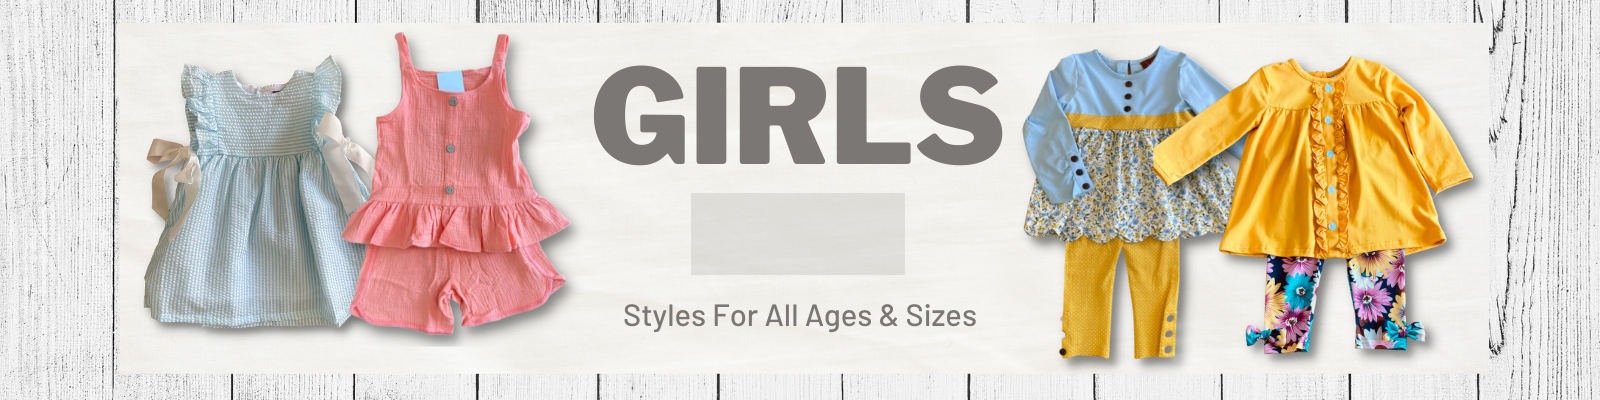 Girls Header to Shop All Girls Clothing at Sugar Britches Boutique in Vidalia, GA